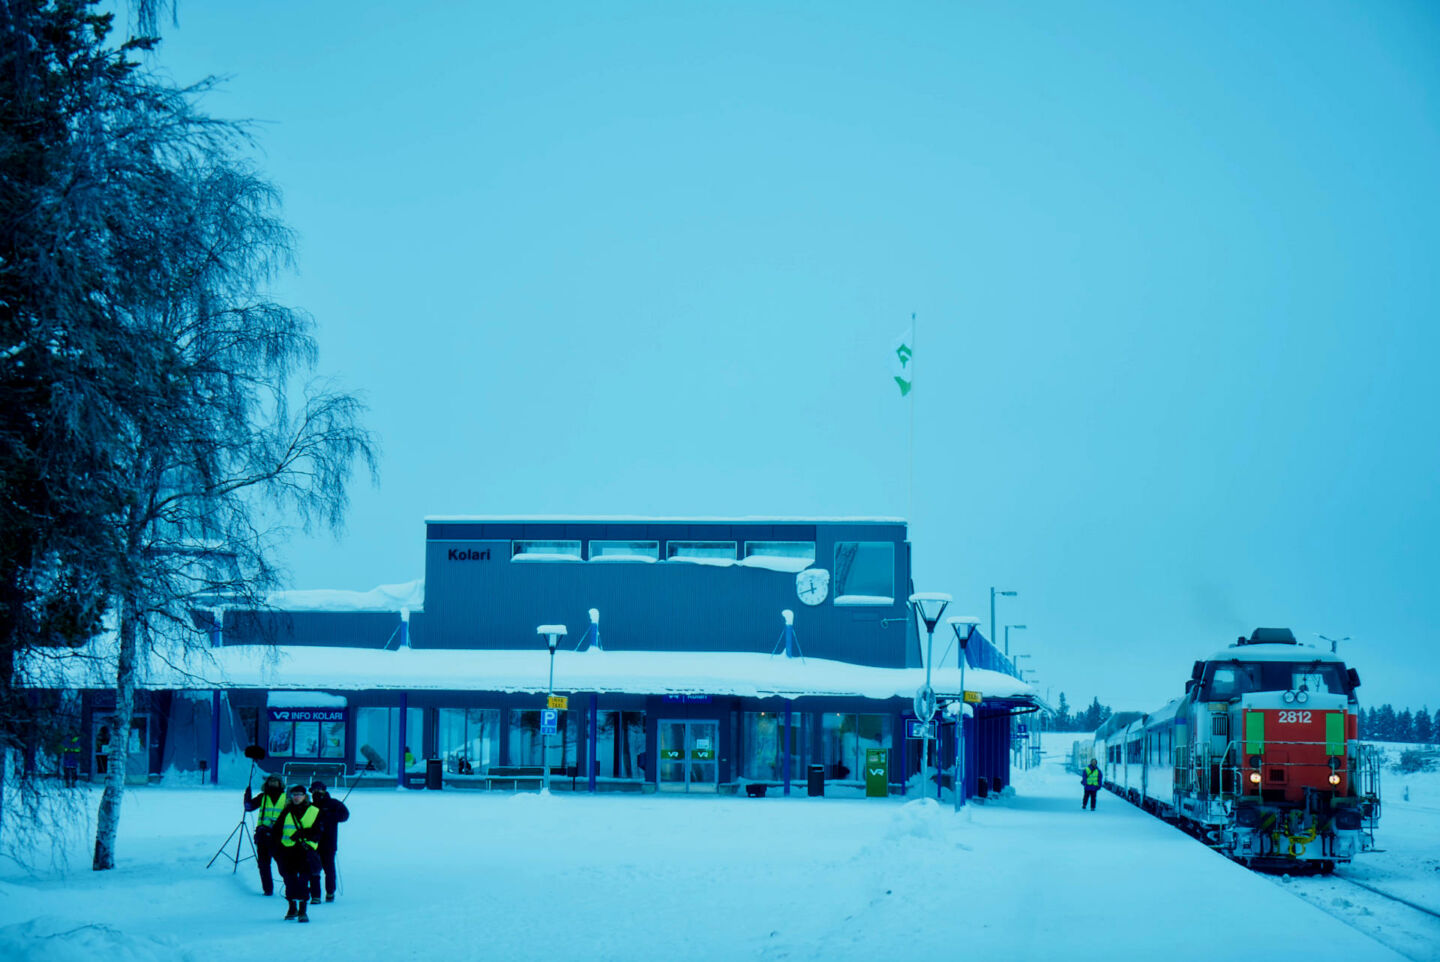 Japanese production Snow Flower - filmed in Finnish Lapland